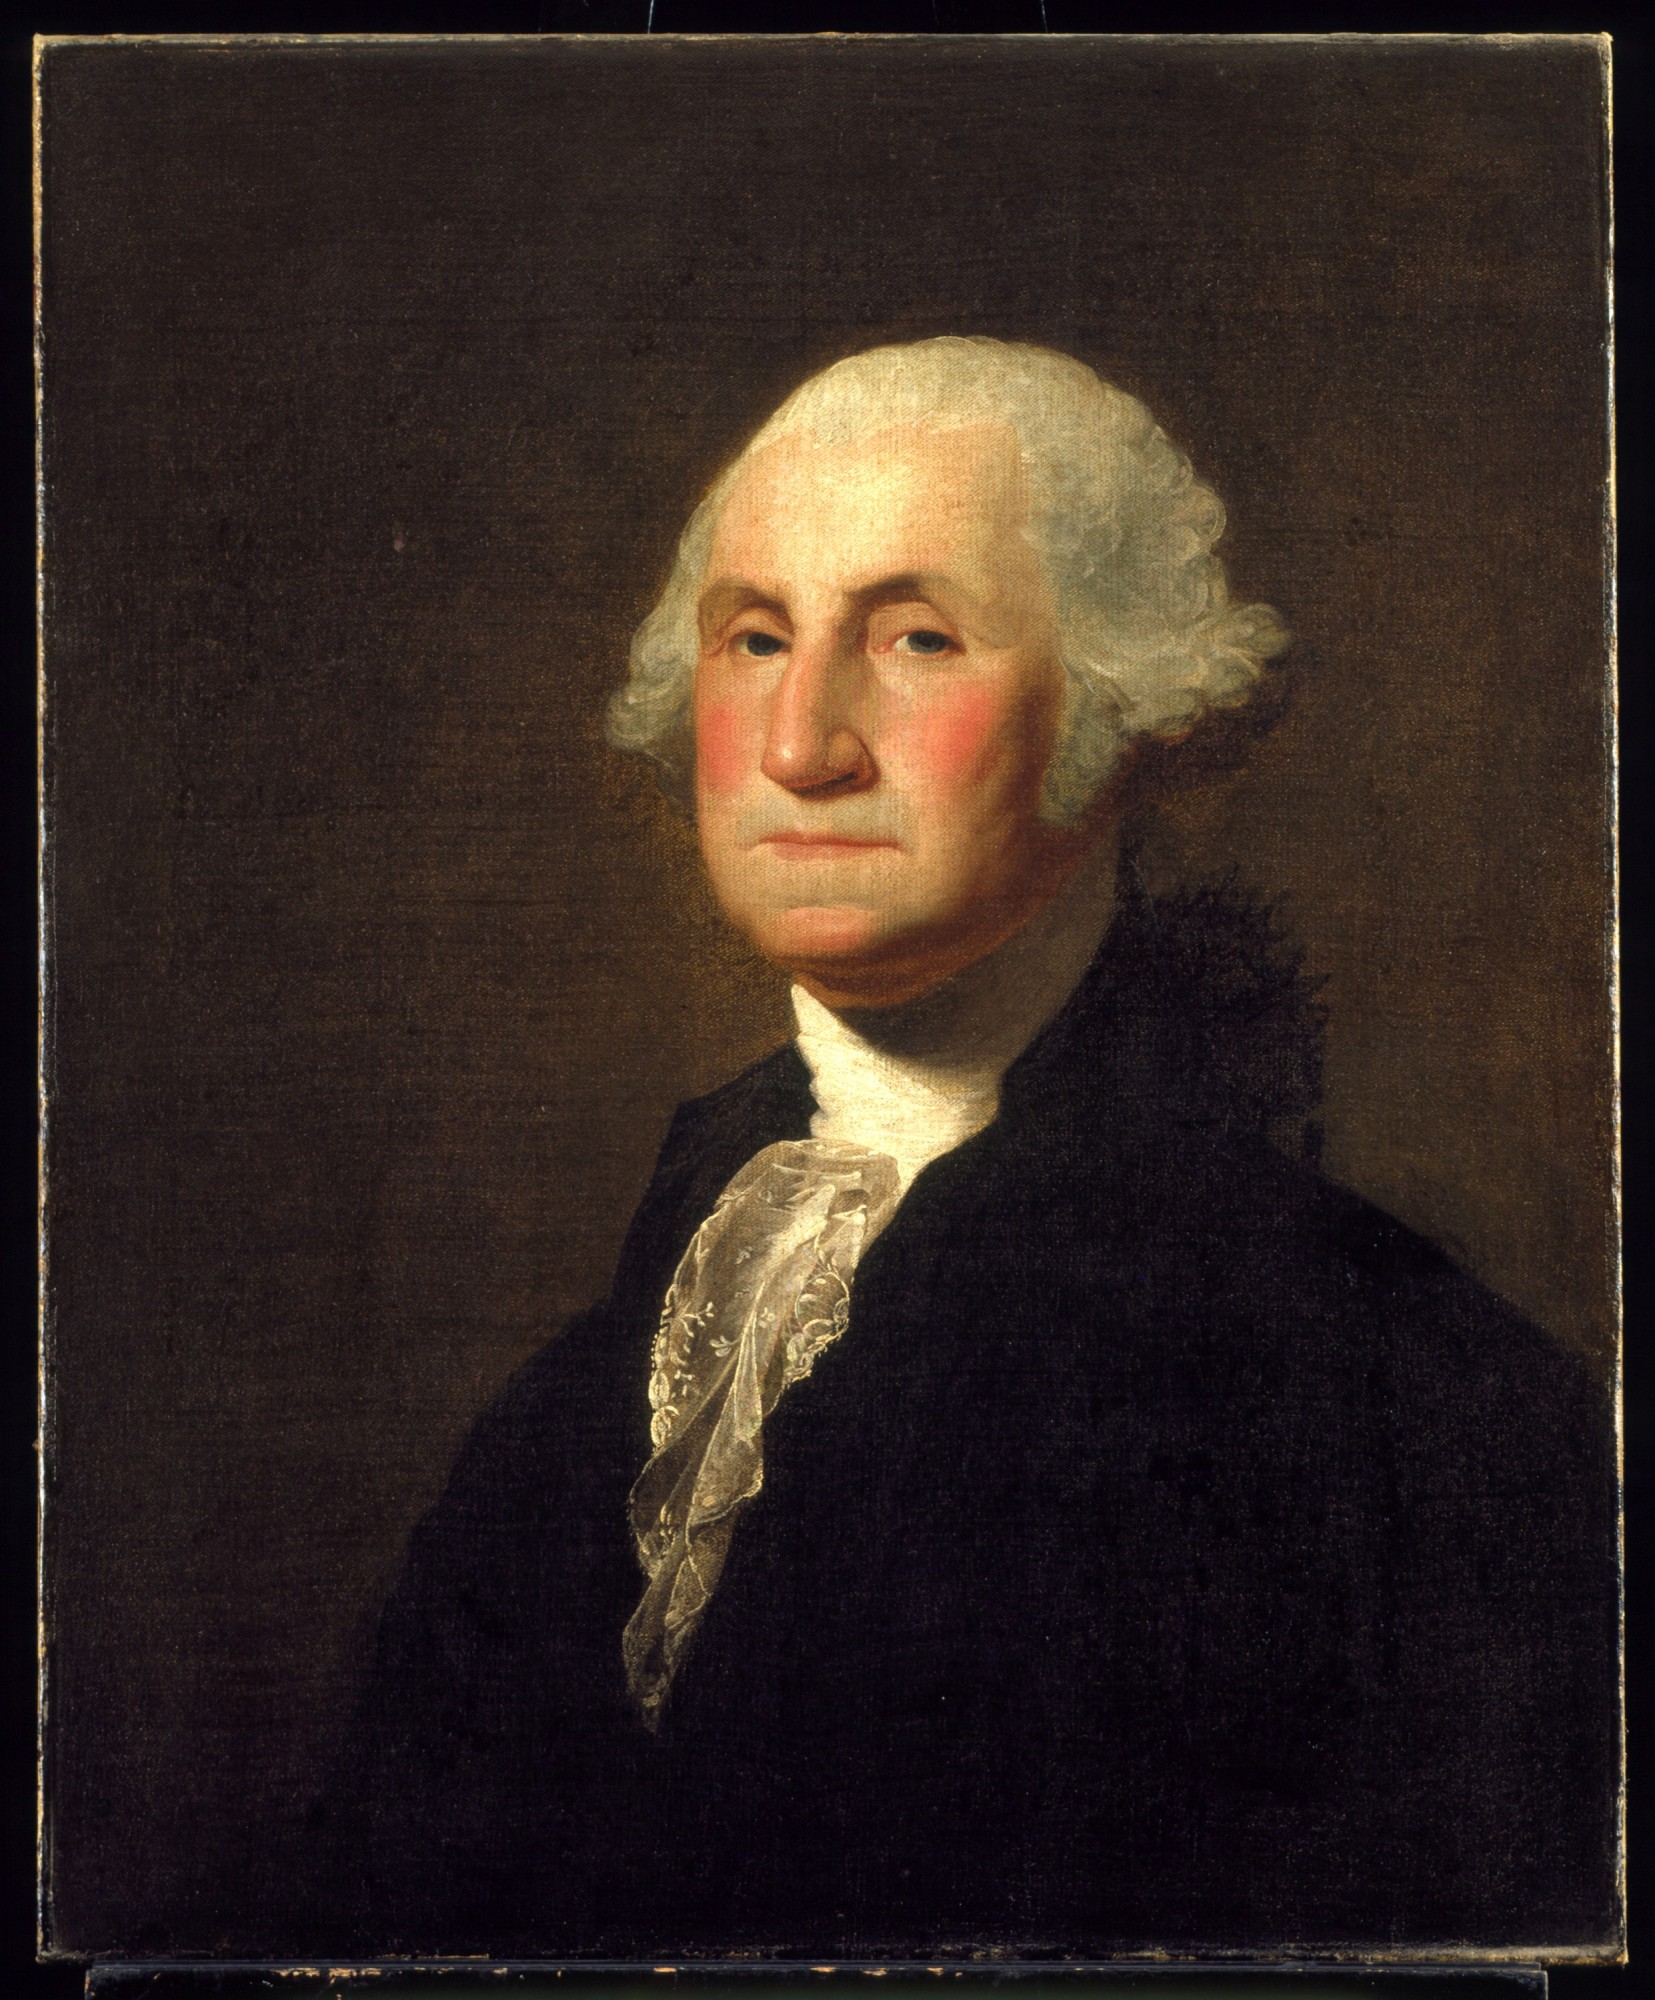 Biography of George Washington · George Washington's Mount Vernon